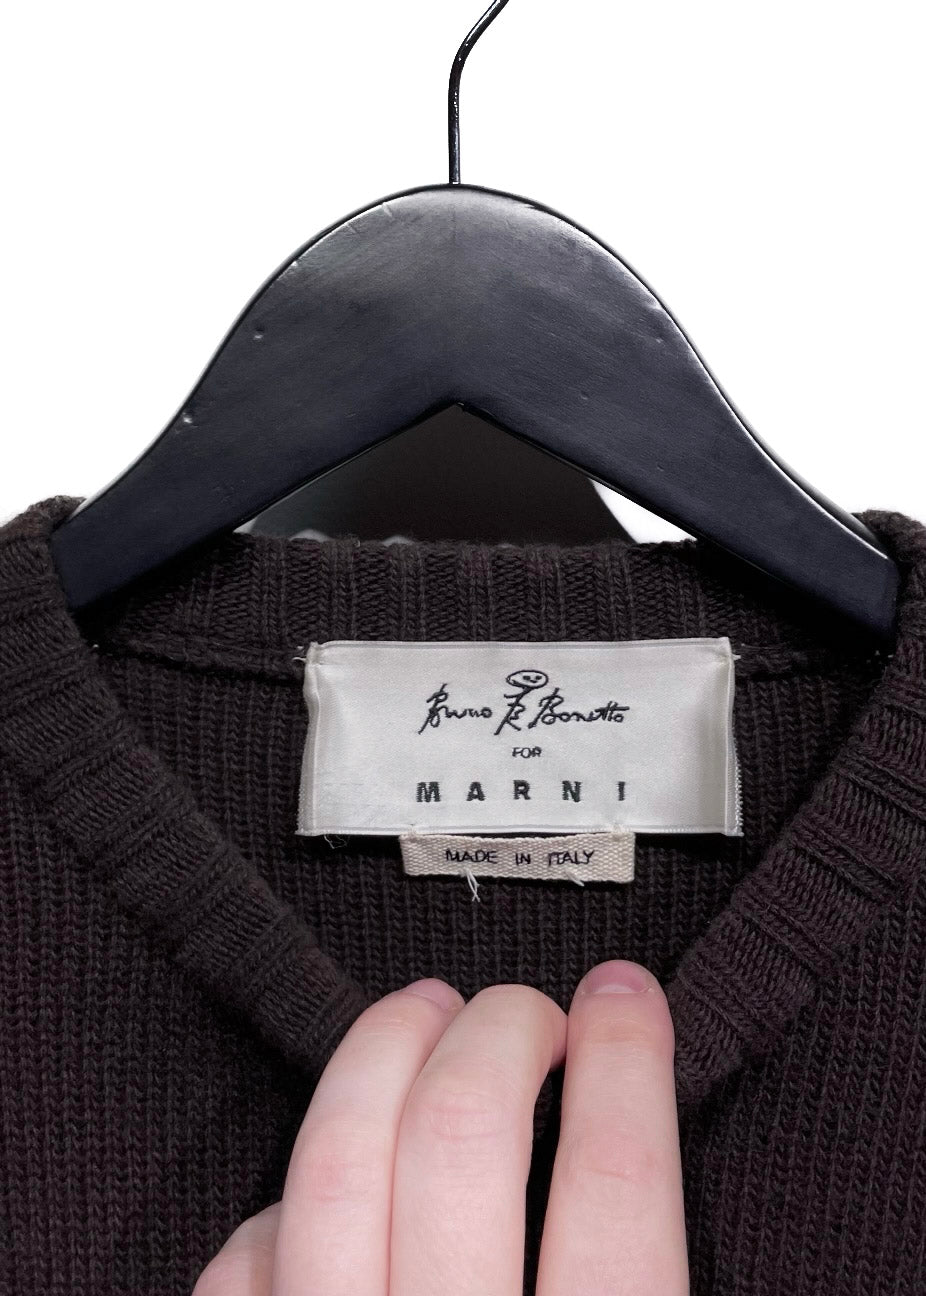 Marni X Bruno Bozzetto Brown Wool Colorblock Embroidered Sweater